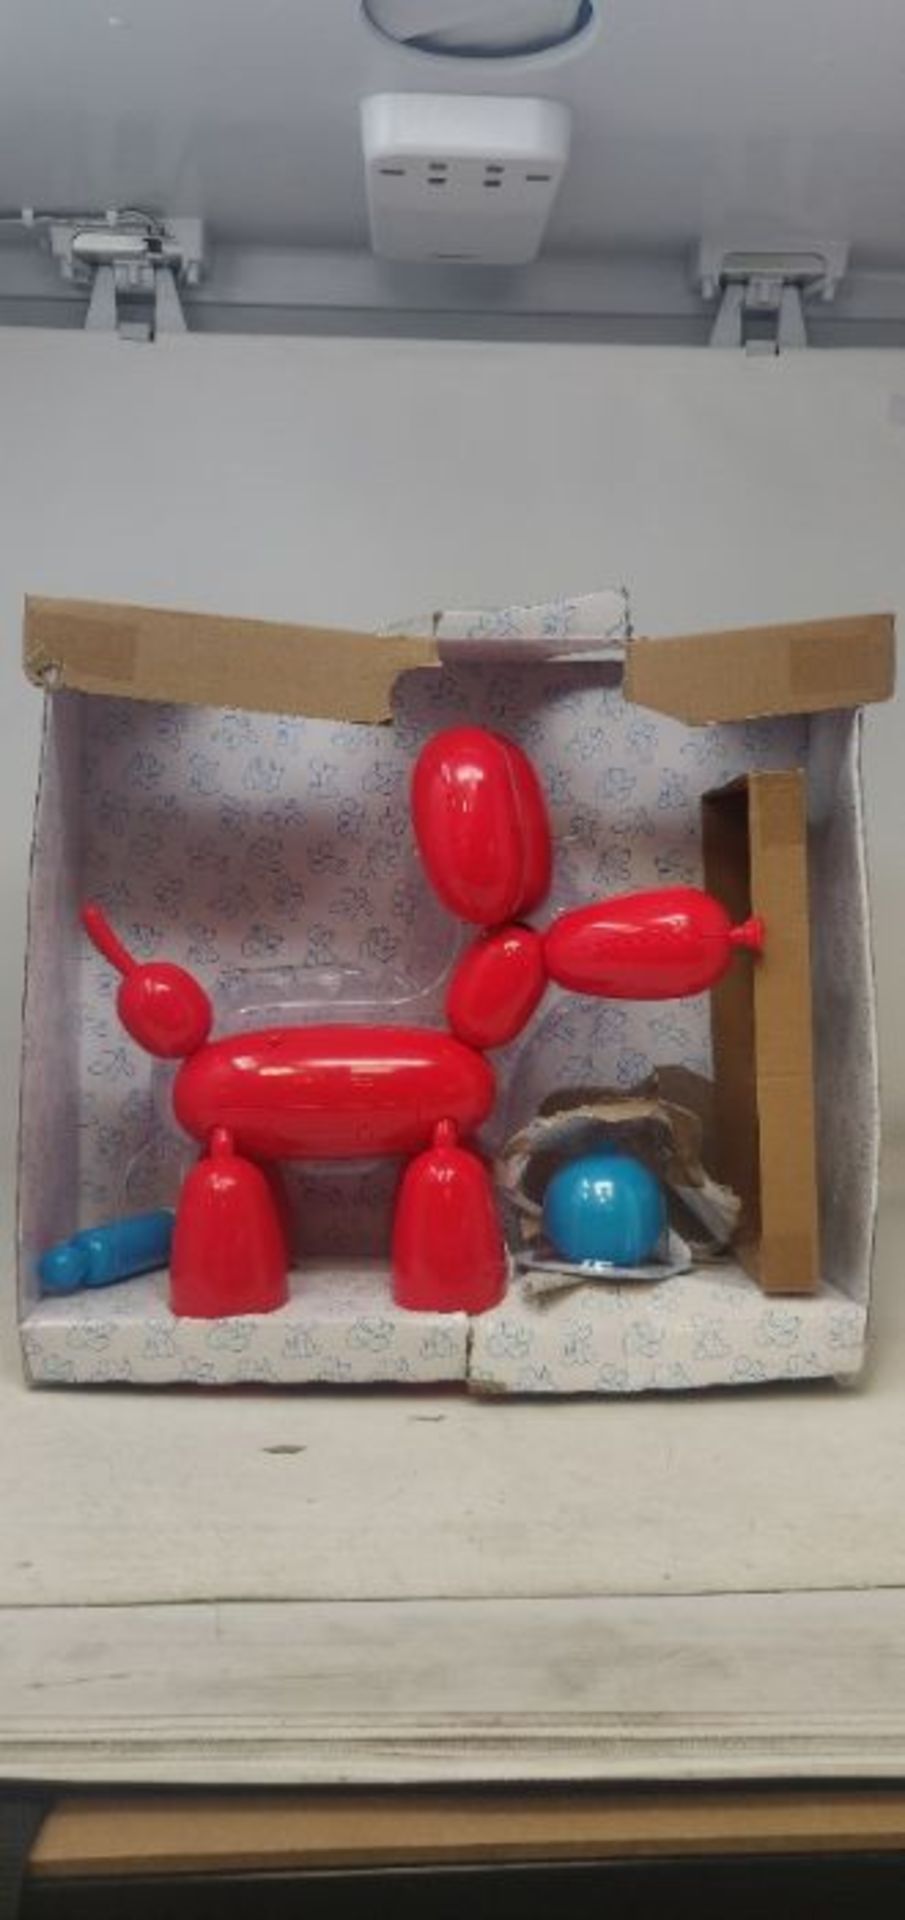 Squeakee 12300 Interactive Balloon Dog - Image 3 of 3